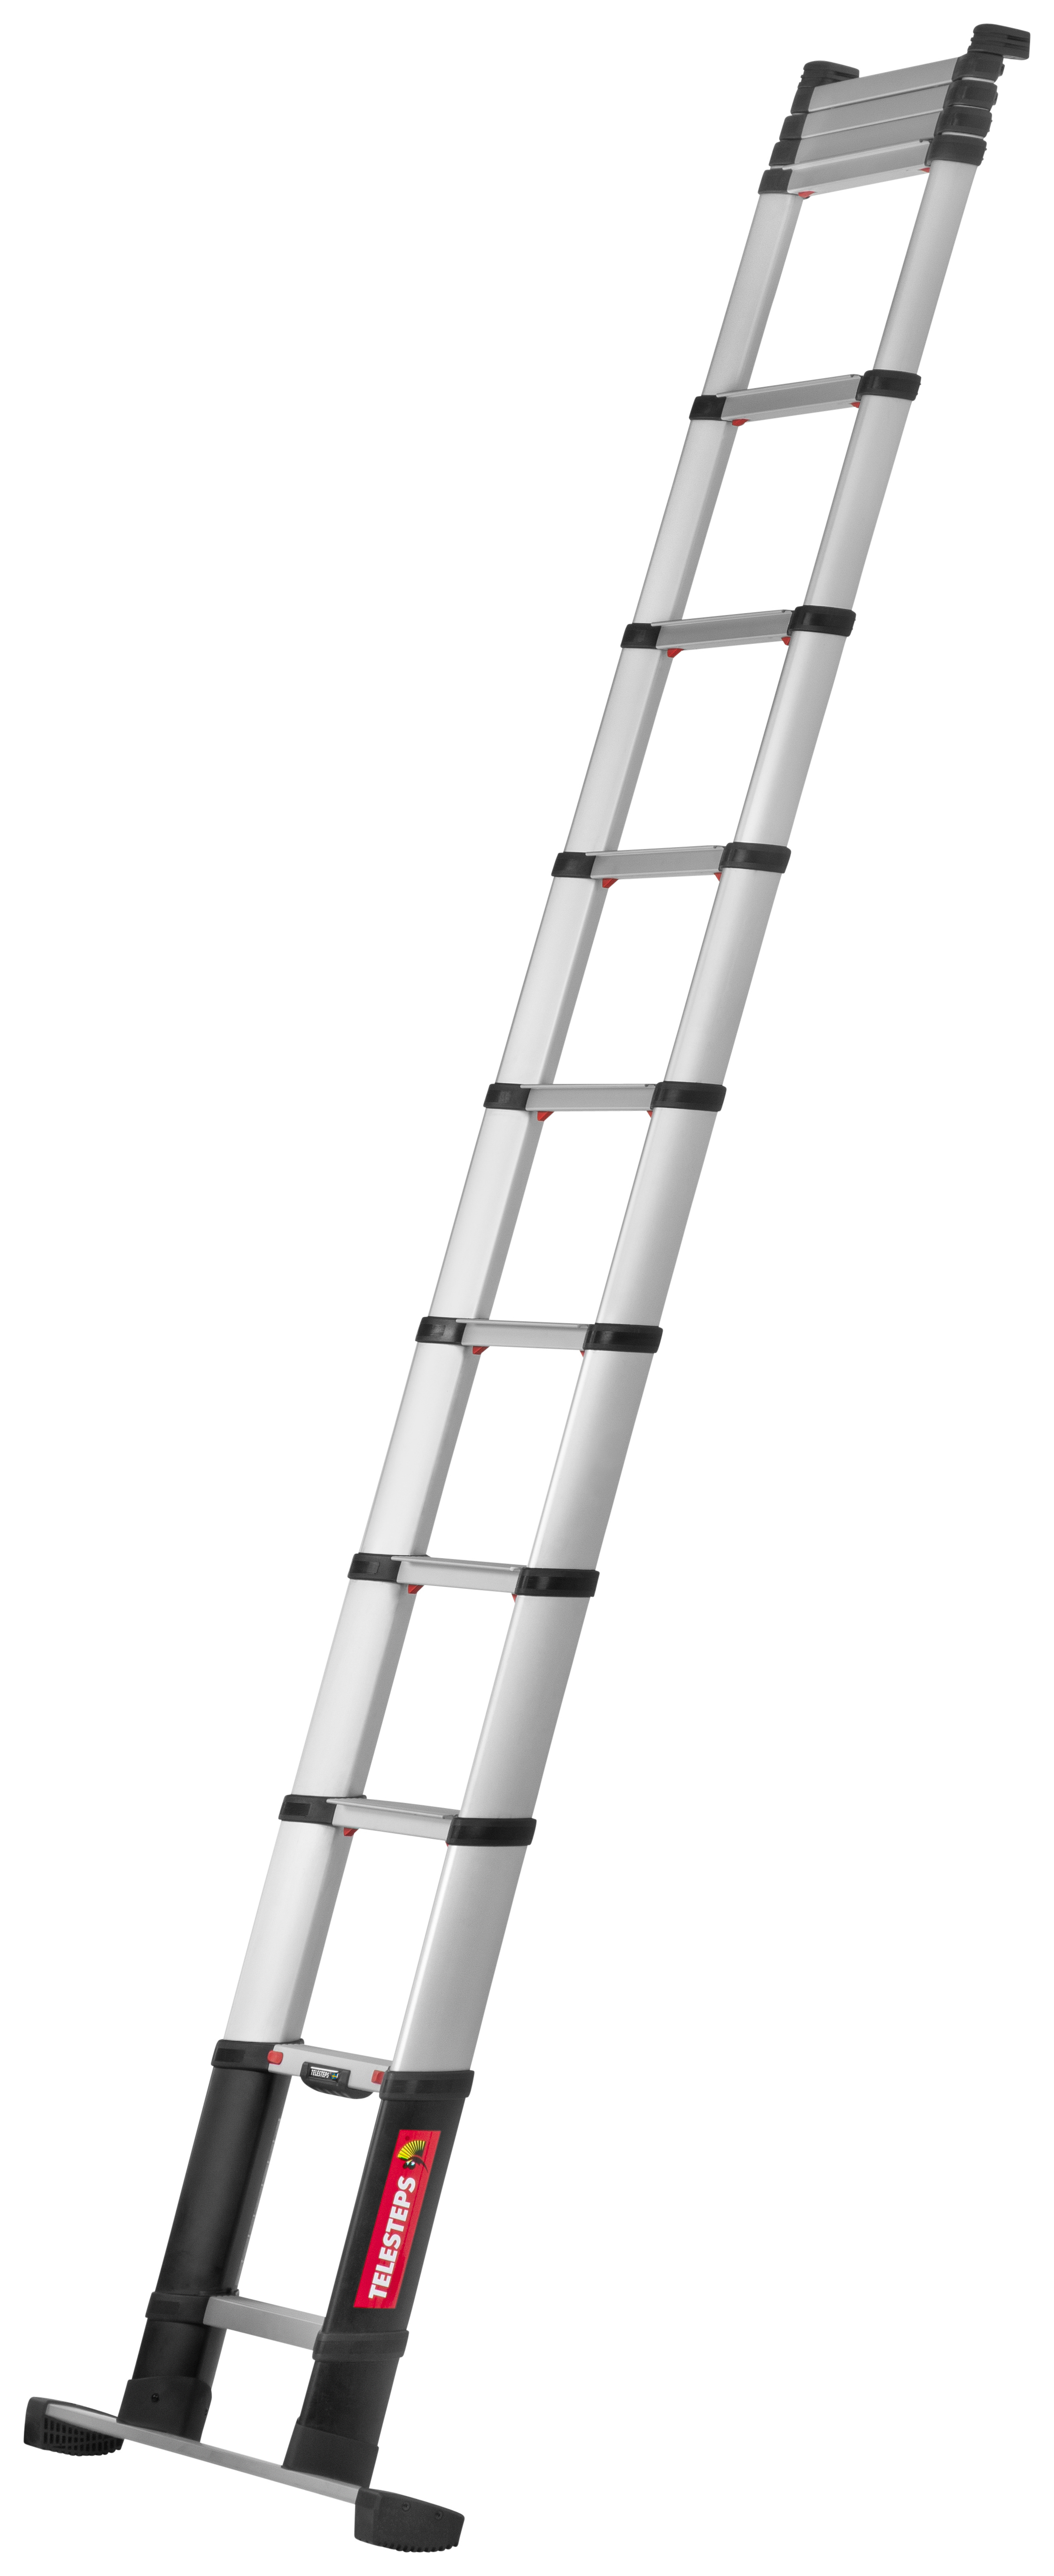 Telesteps Prime Line 4.1m Aluminium Telescopic Ladder with stabiliser Bar - Max Height 4.8m